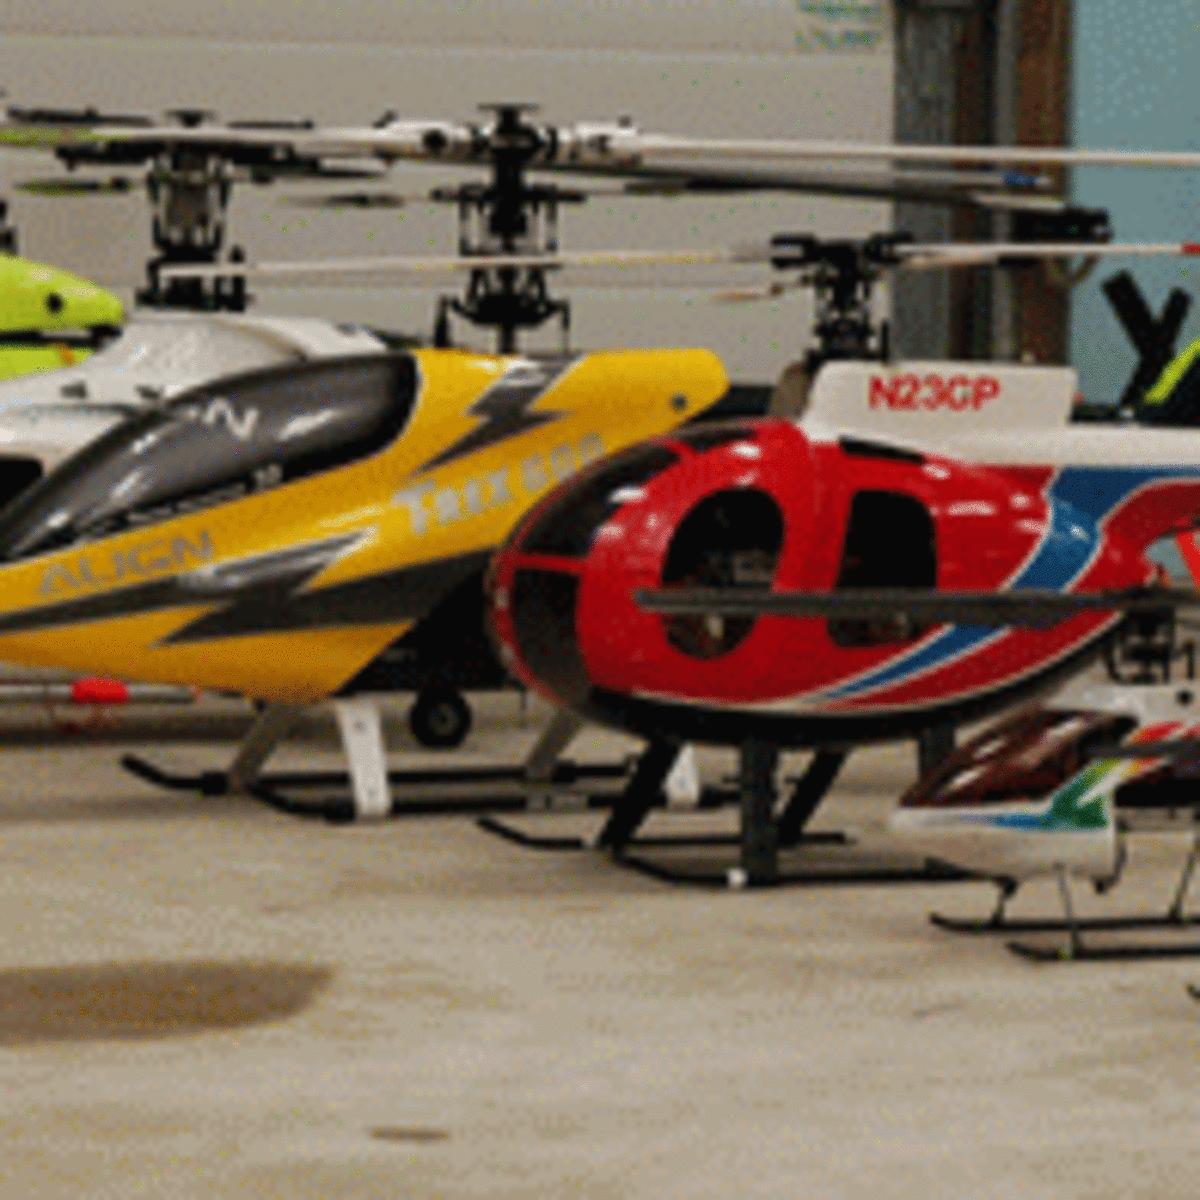 Super Big Rc Turbine Helicopter Price: Popular Models and Price Ranges for Super Big RC Turbine Helicopters